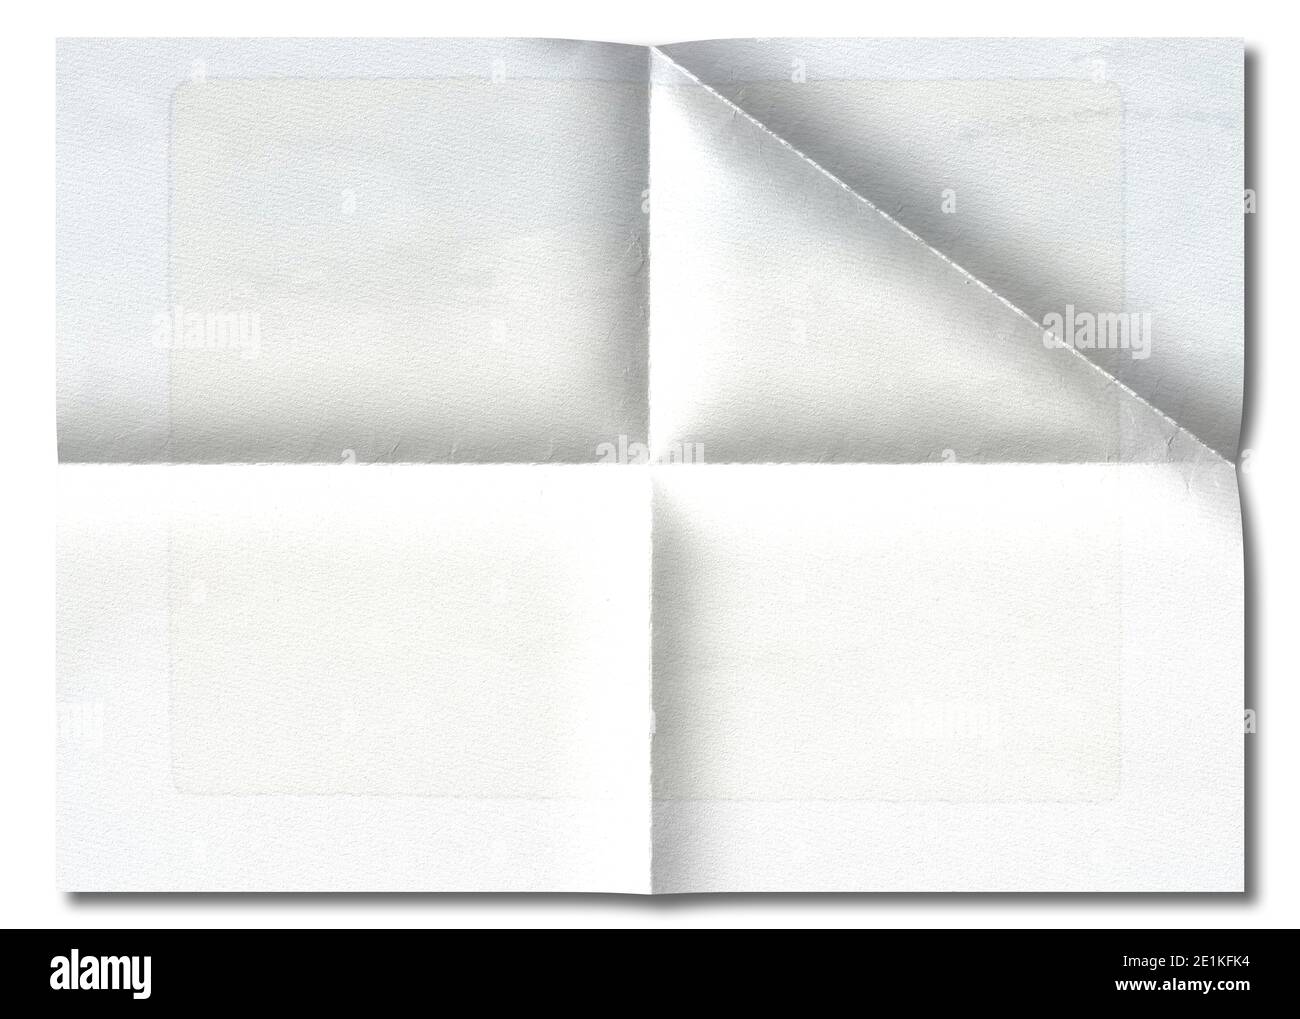 https://c8.alamy.com/comp/2E1KFK4/white-folded-paper-crumpledcrumpled-paper-texture-white-battered-paper-background-white-empty-leaf-of-crumpled-paper-torn-surface-of-letter-blank-2E1KFK4.jpg